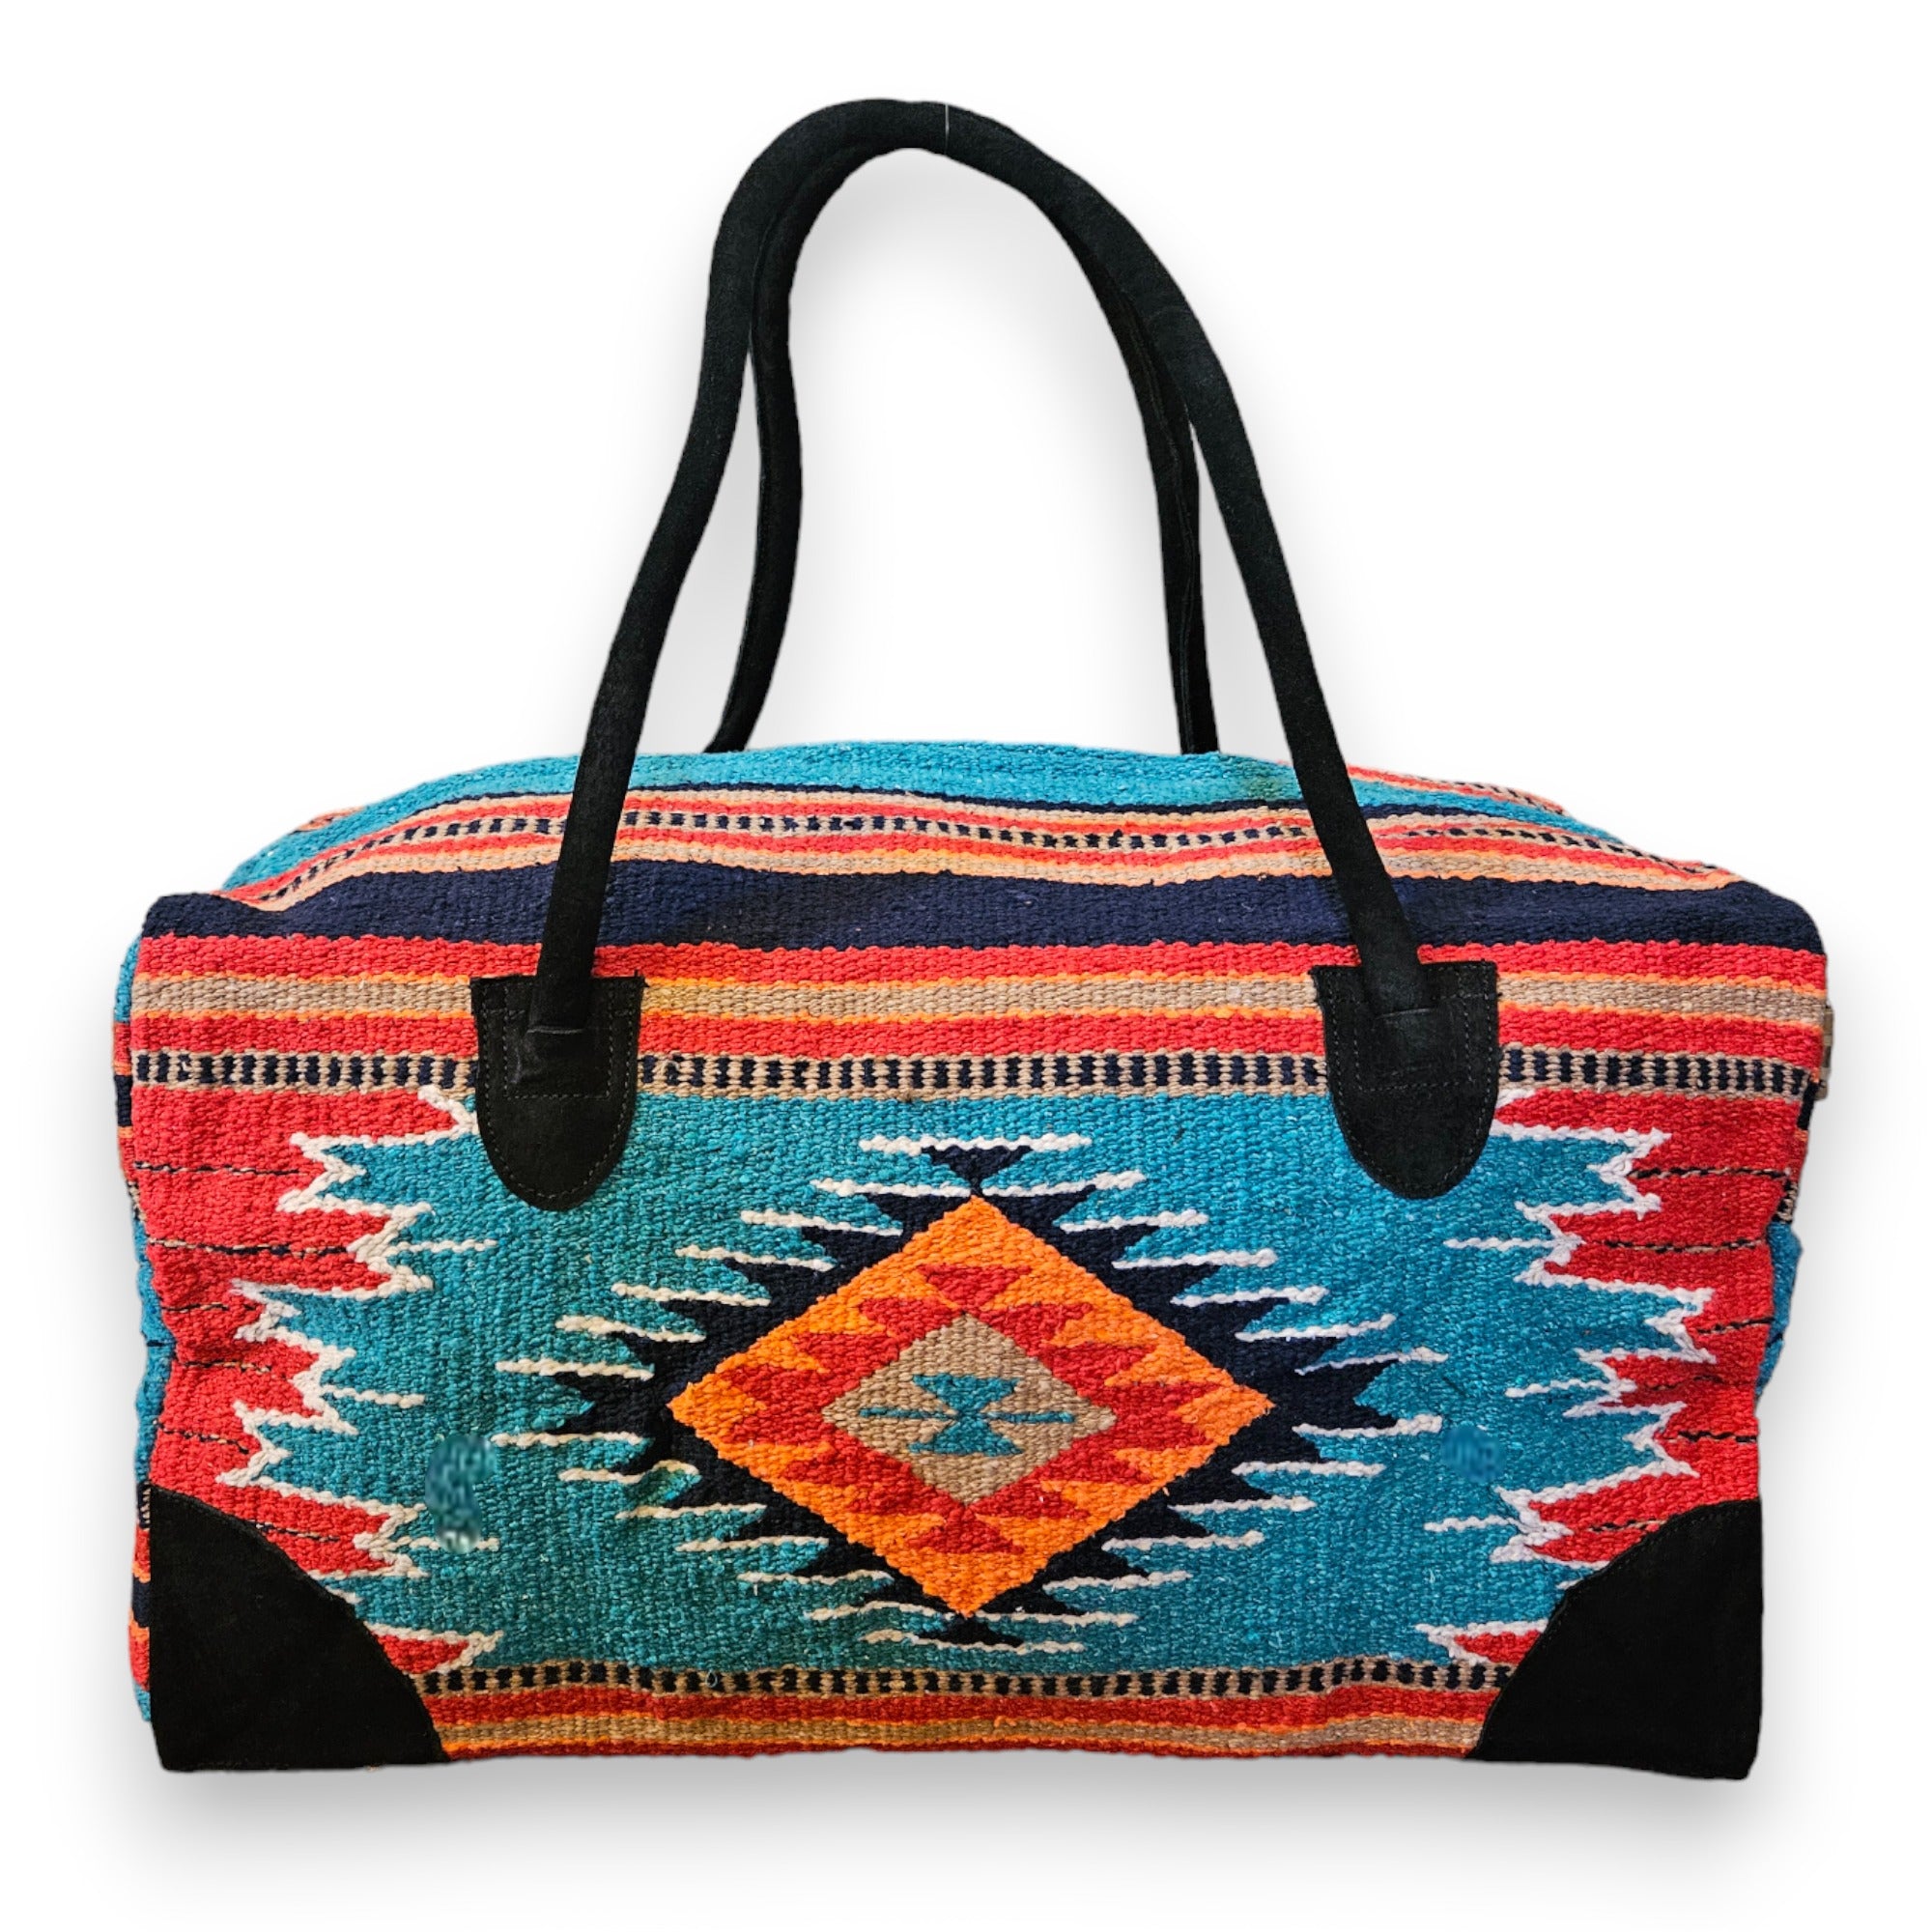 COACH Handbags for sale in Providence, Rhode Island | Facebook Marketplace  | Facebook